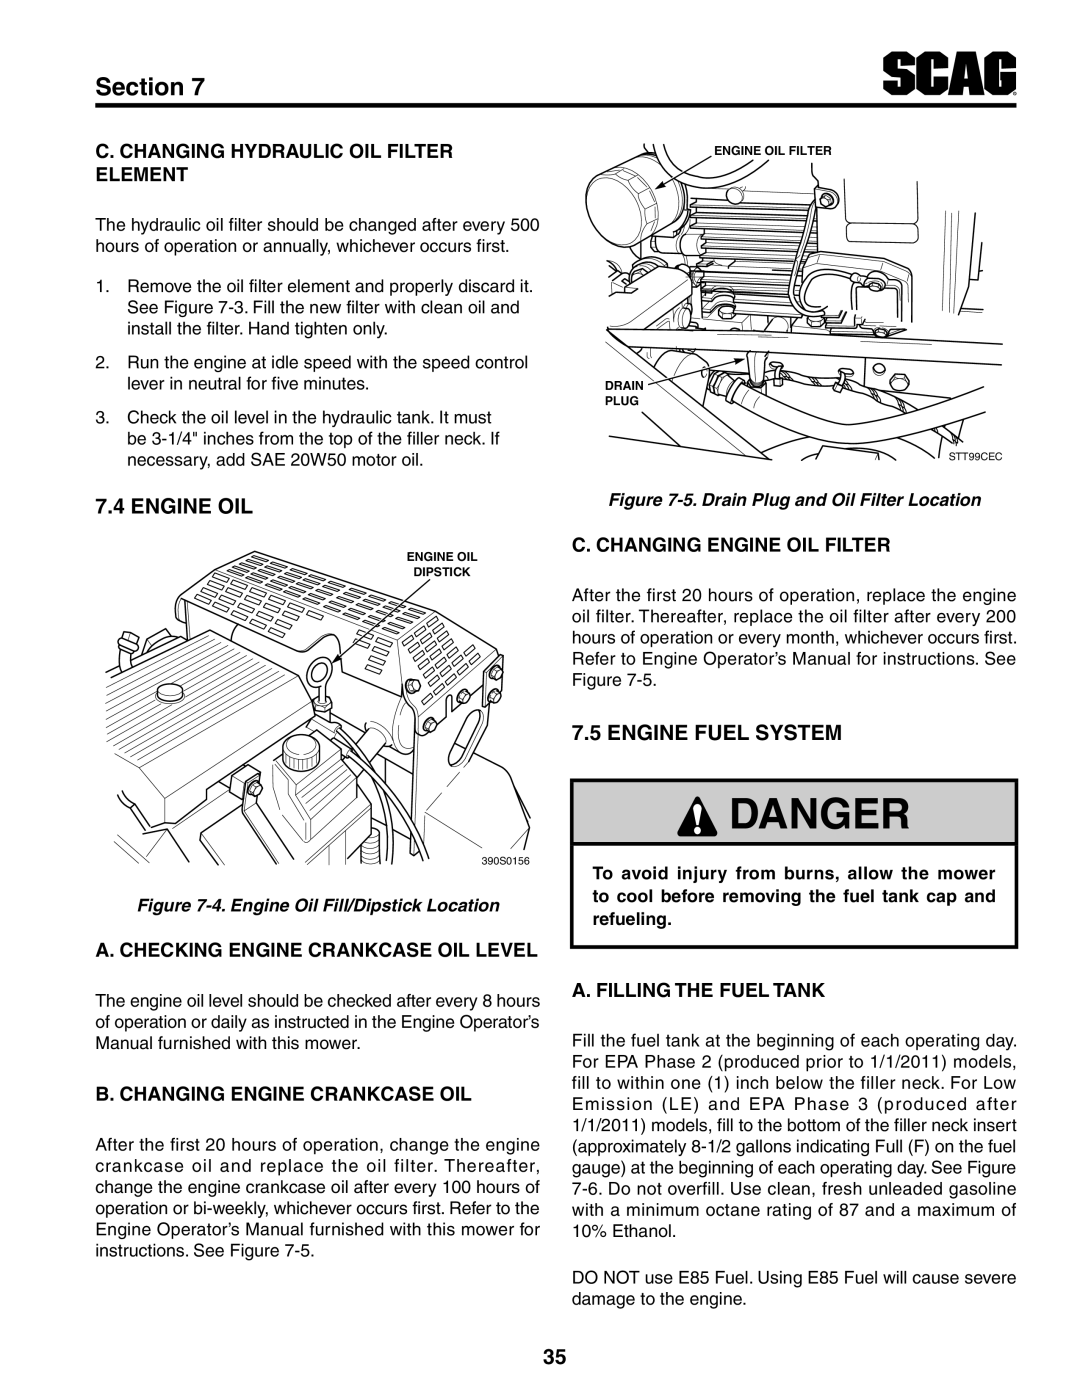 Scag Power Equipment STT61V-29DFI Danger, Engine Oil, Engine Fuel System, Section, A. Checking Engine Crankcase Oil Level 